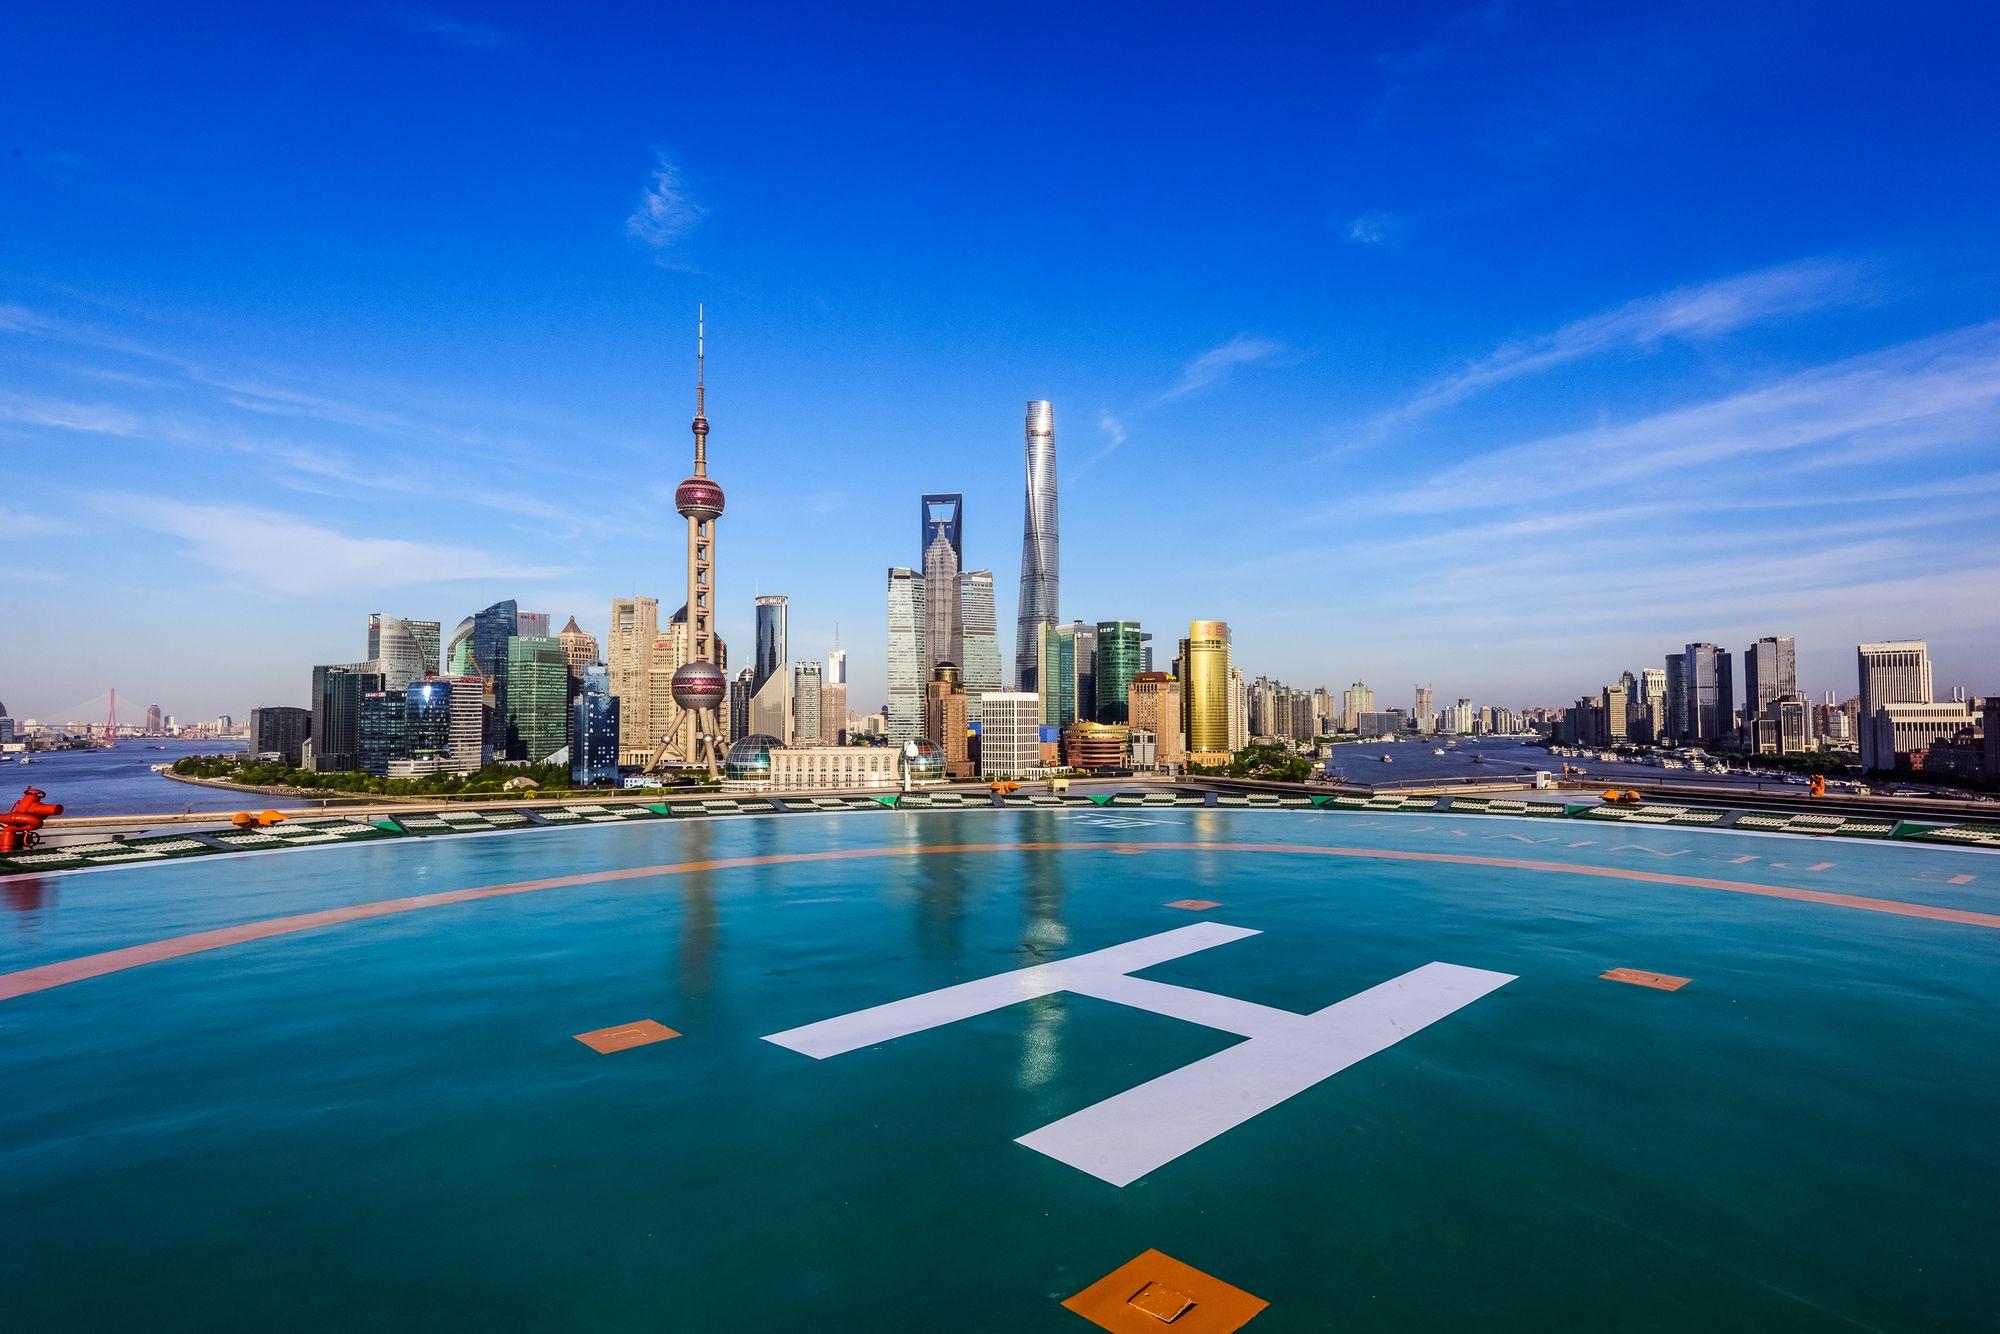 Vista da fachada The Peninsula Shanghai